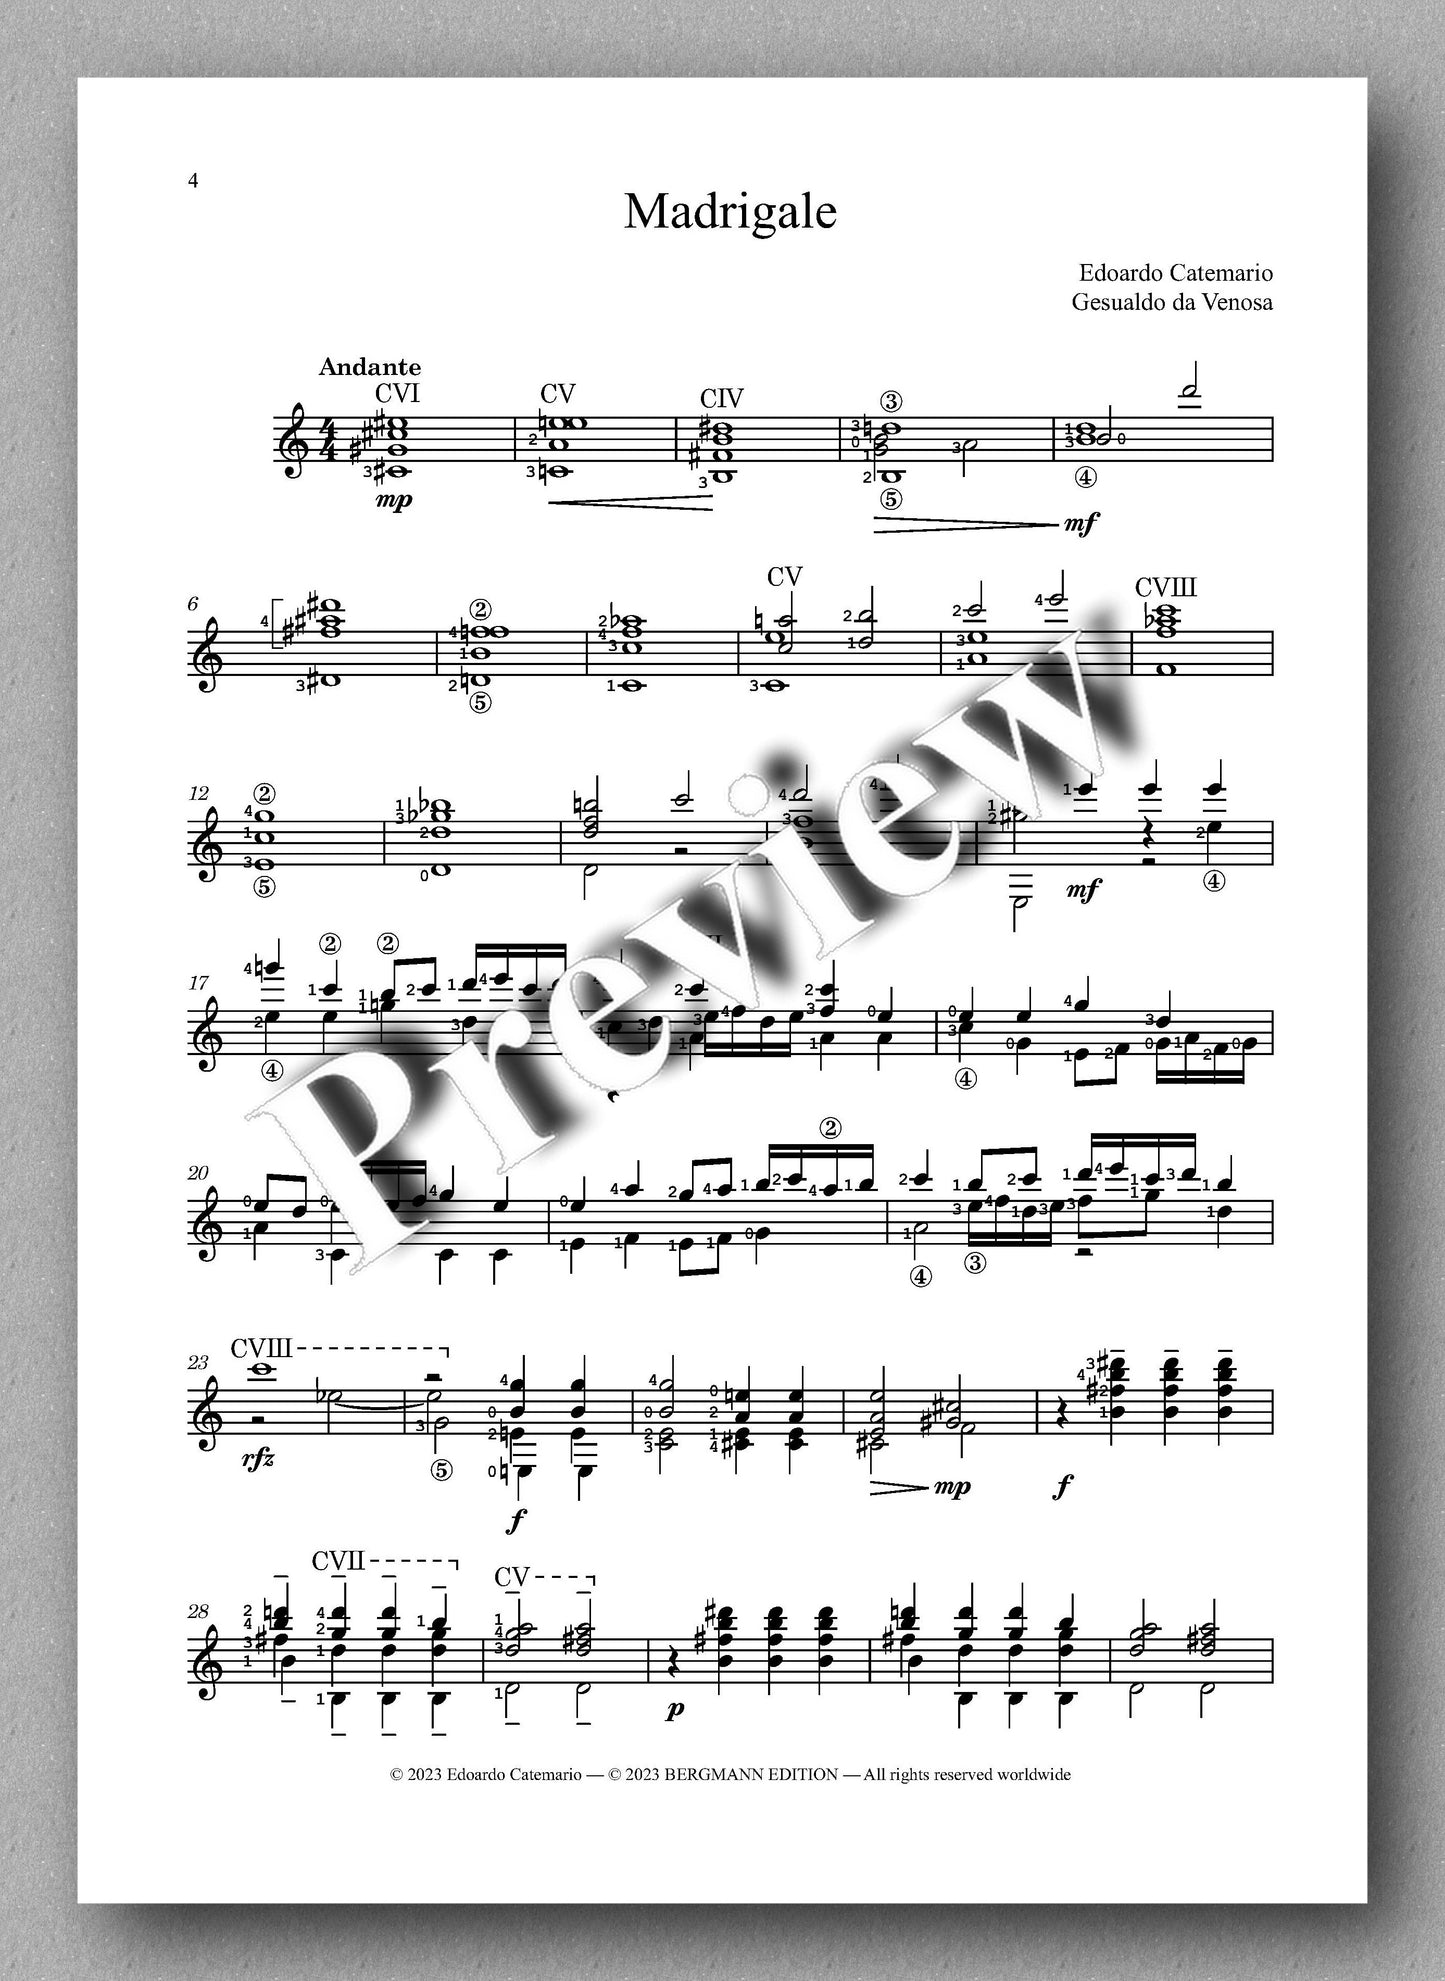 Suite Gesualdiana by Edoardo Catemario - preview of the music score 1